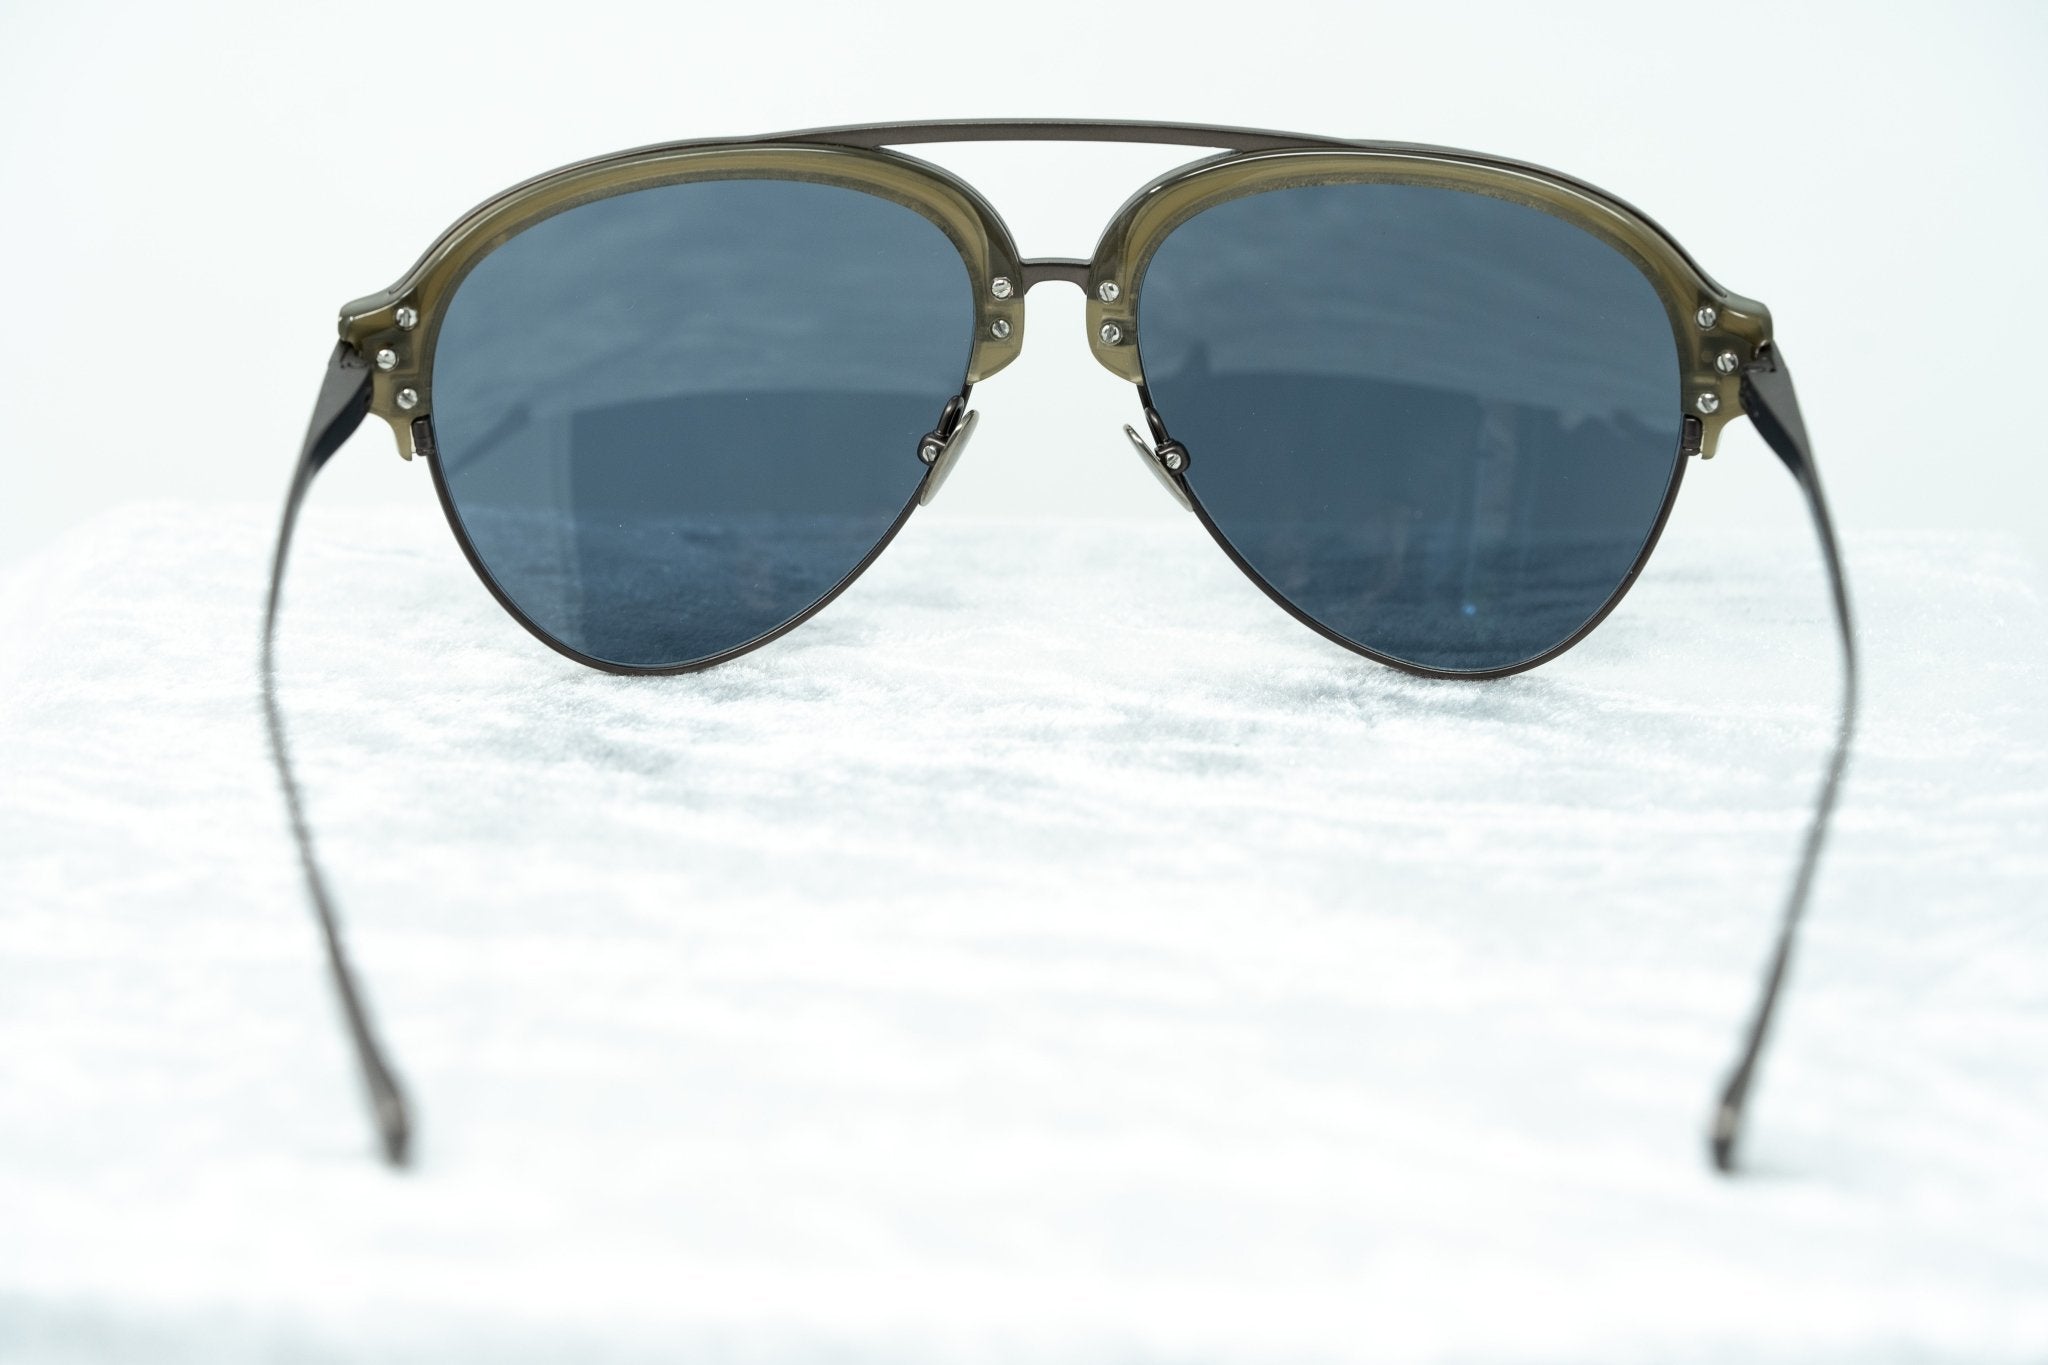 Kris Van Assche Sunglasses Khaki Matte Grey and Gold Mirror Lenses Category 3 - KVA74C6SUN - Watches & Crystals